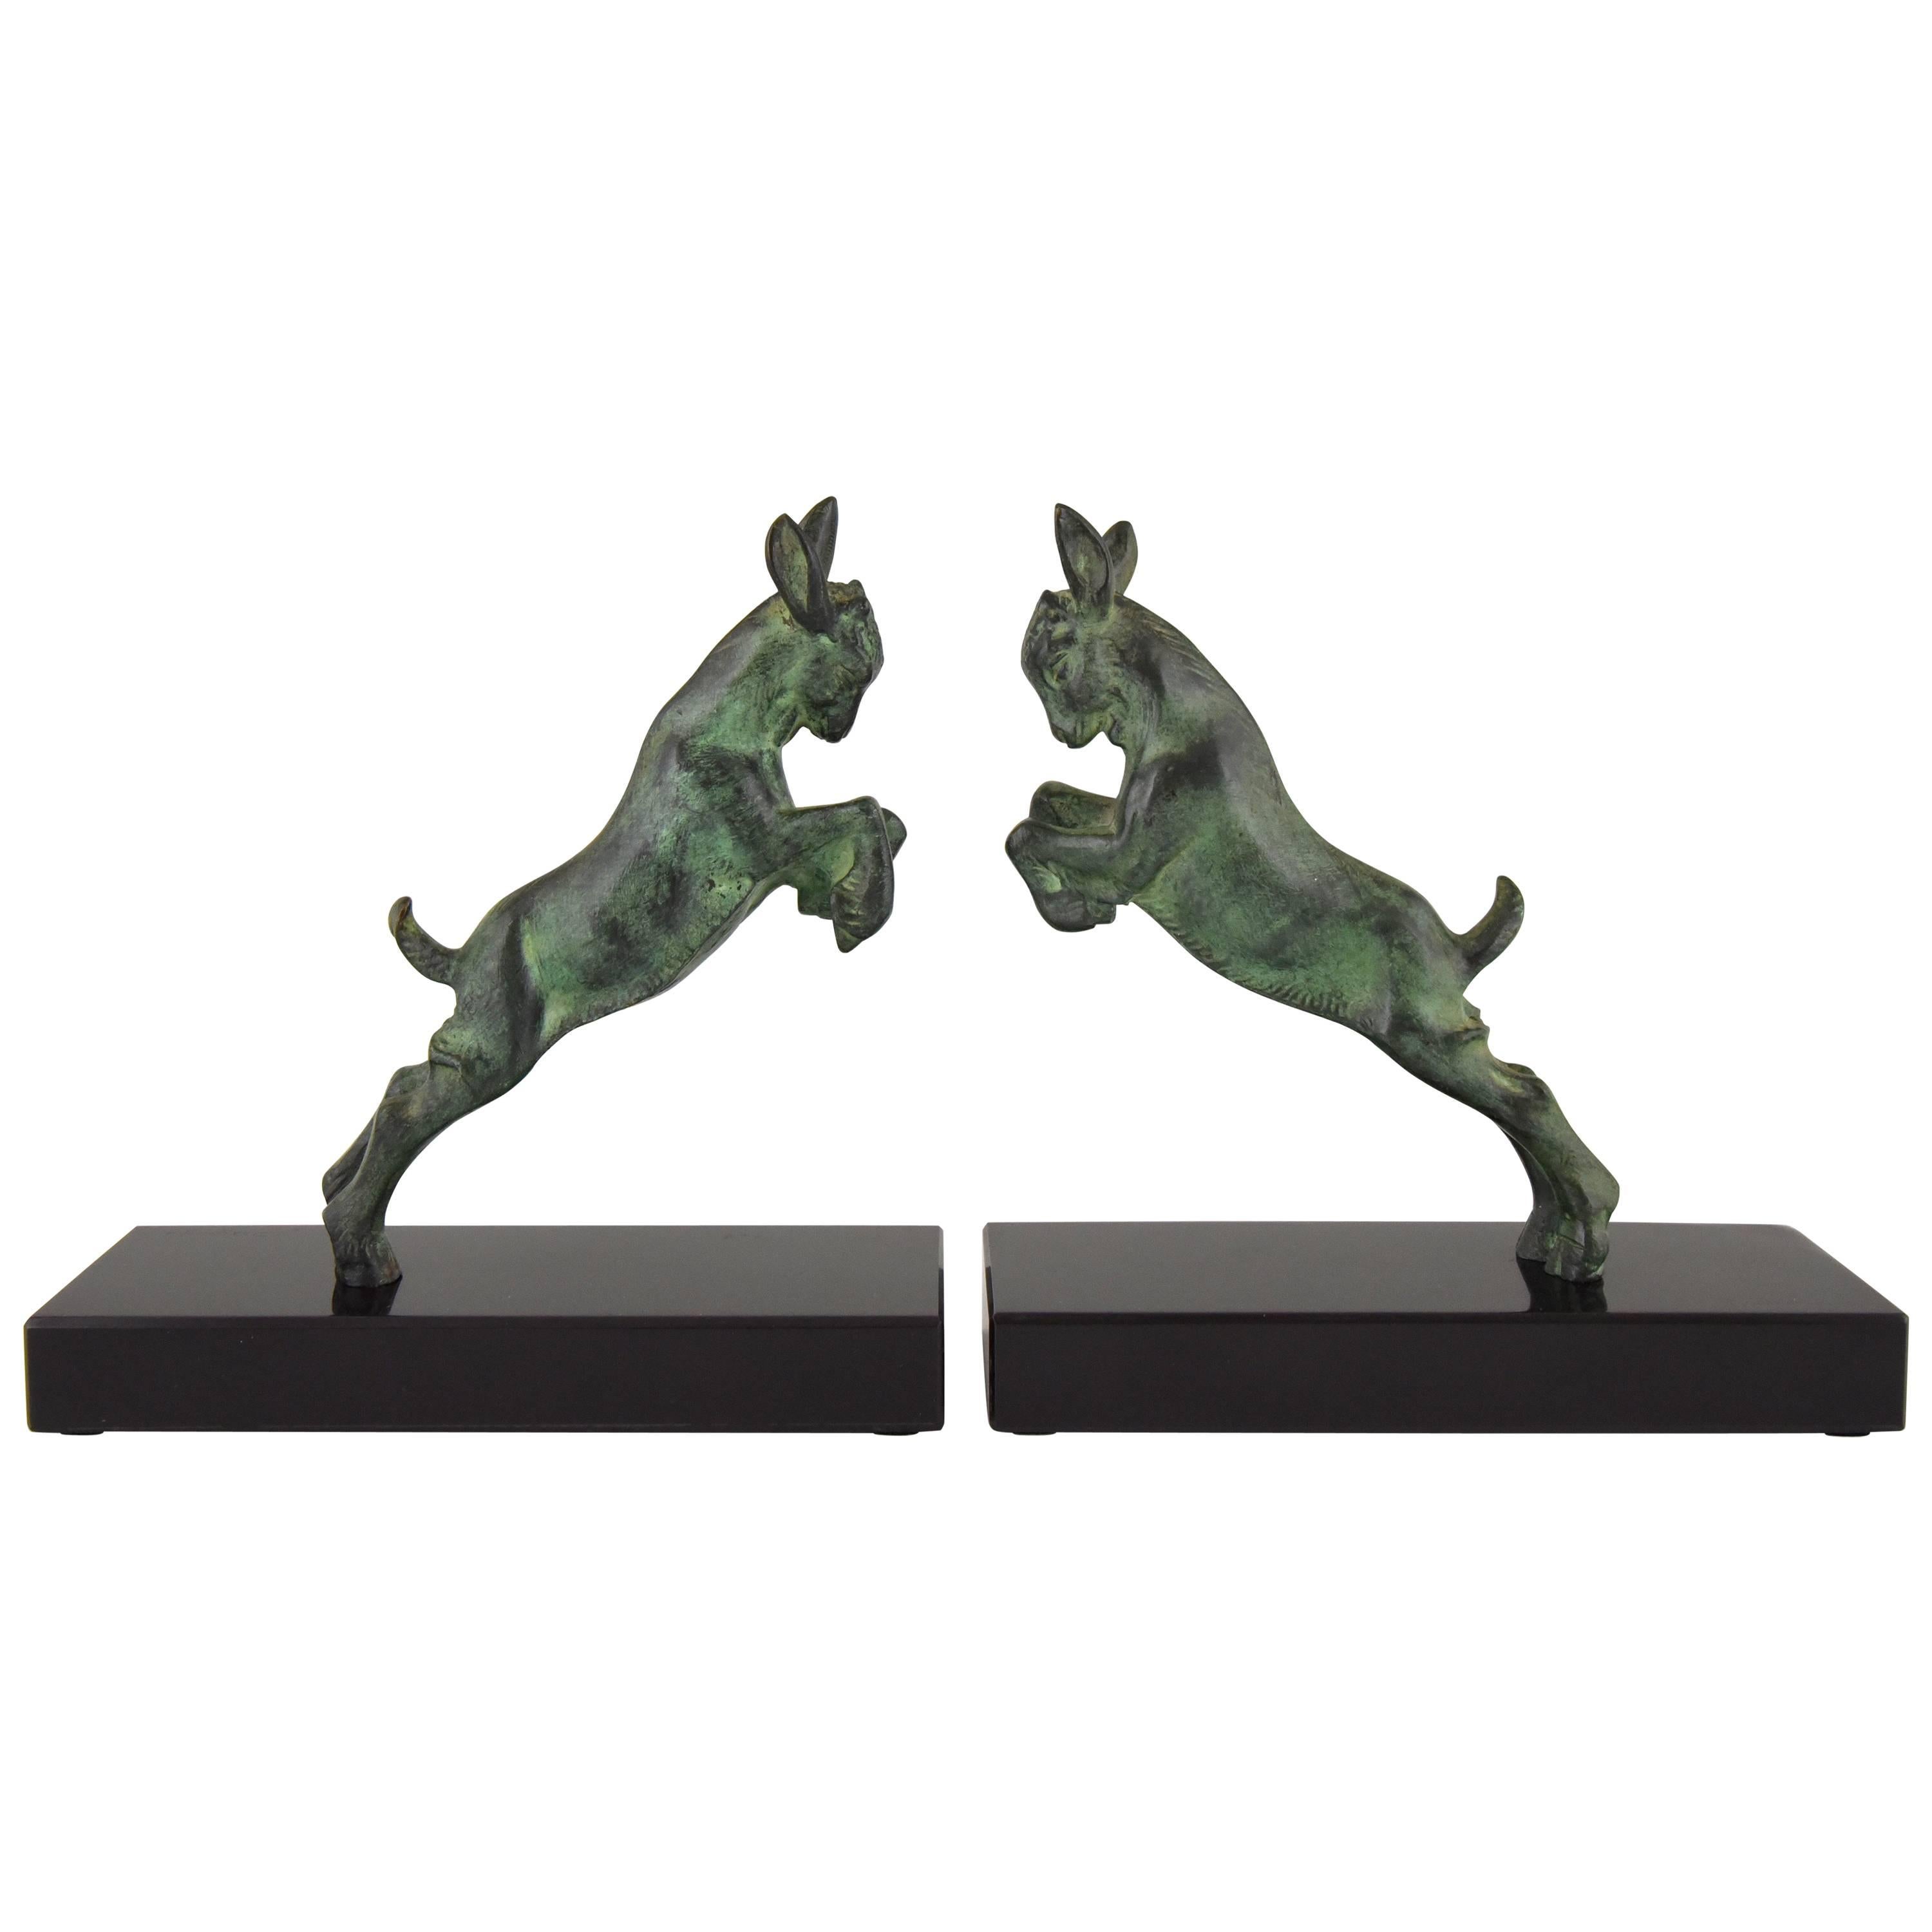 Art Deco Bronze Bookends with Jumping Goats, Joe Descomps,  1930 France